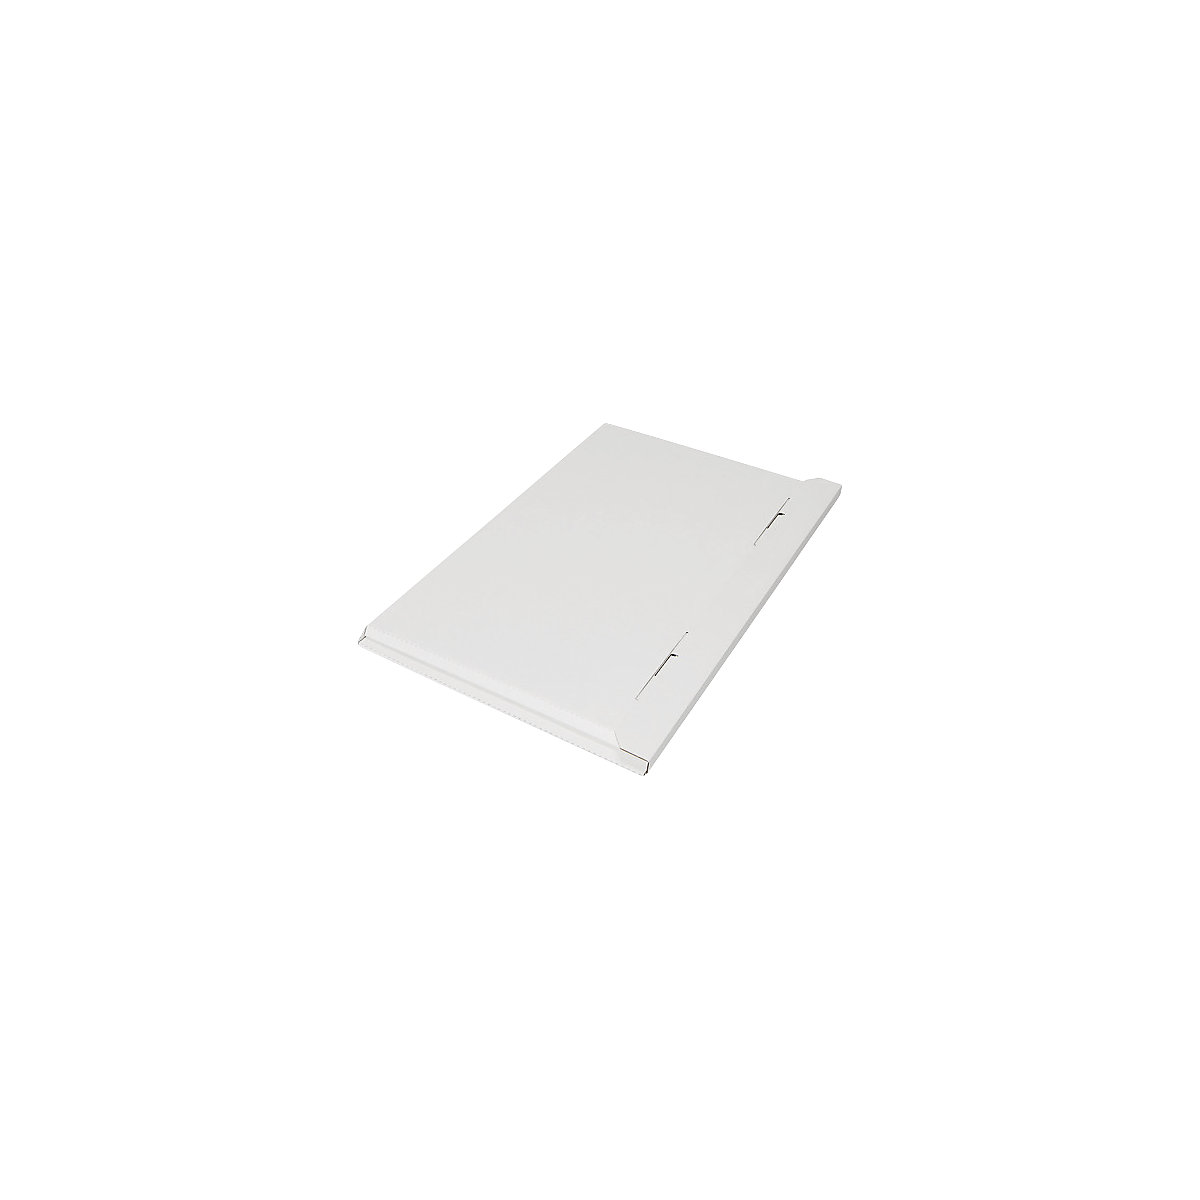 Flach-/Kalender-Pack, 1-wellig, Innen-LxBxH 630 x 450 x 10 mm, weiß, ab 20 Stk-11